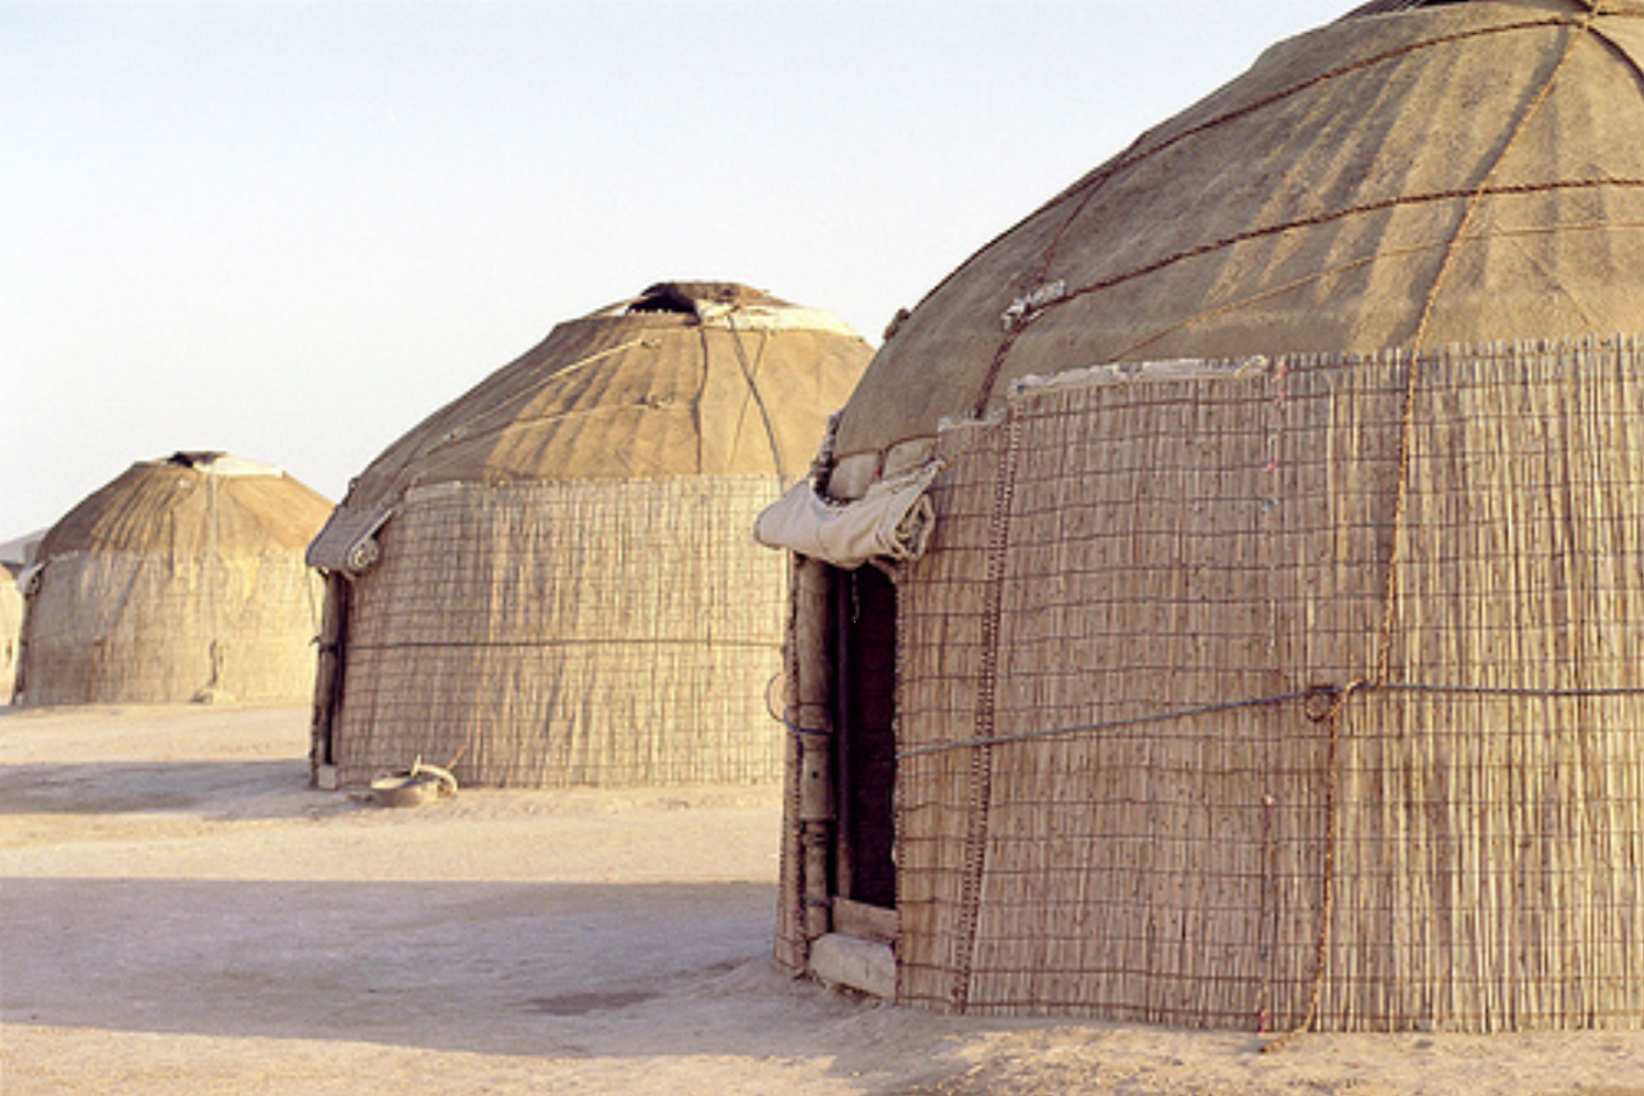 Yurts in the Kara Kum's Damla Oasis